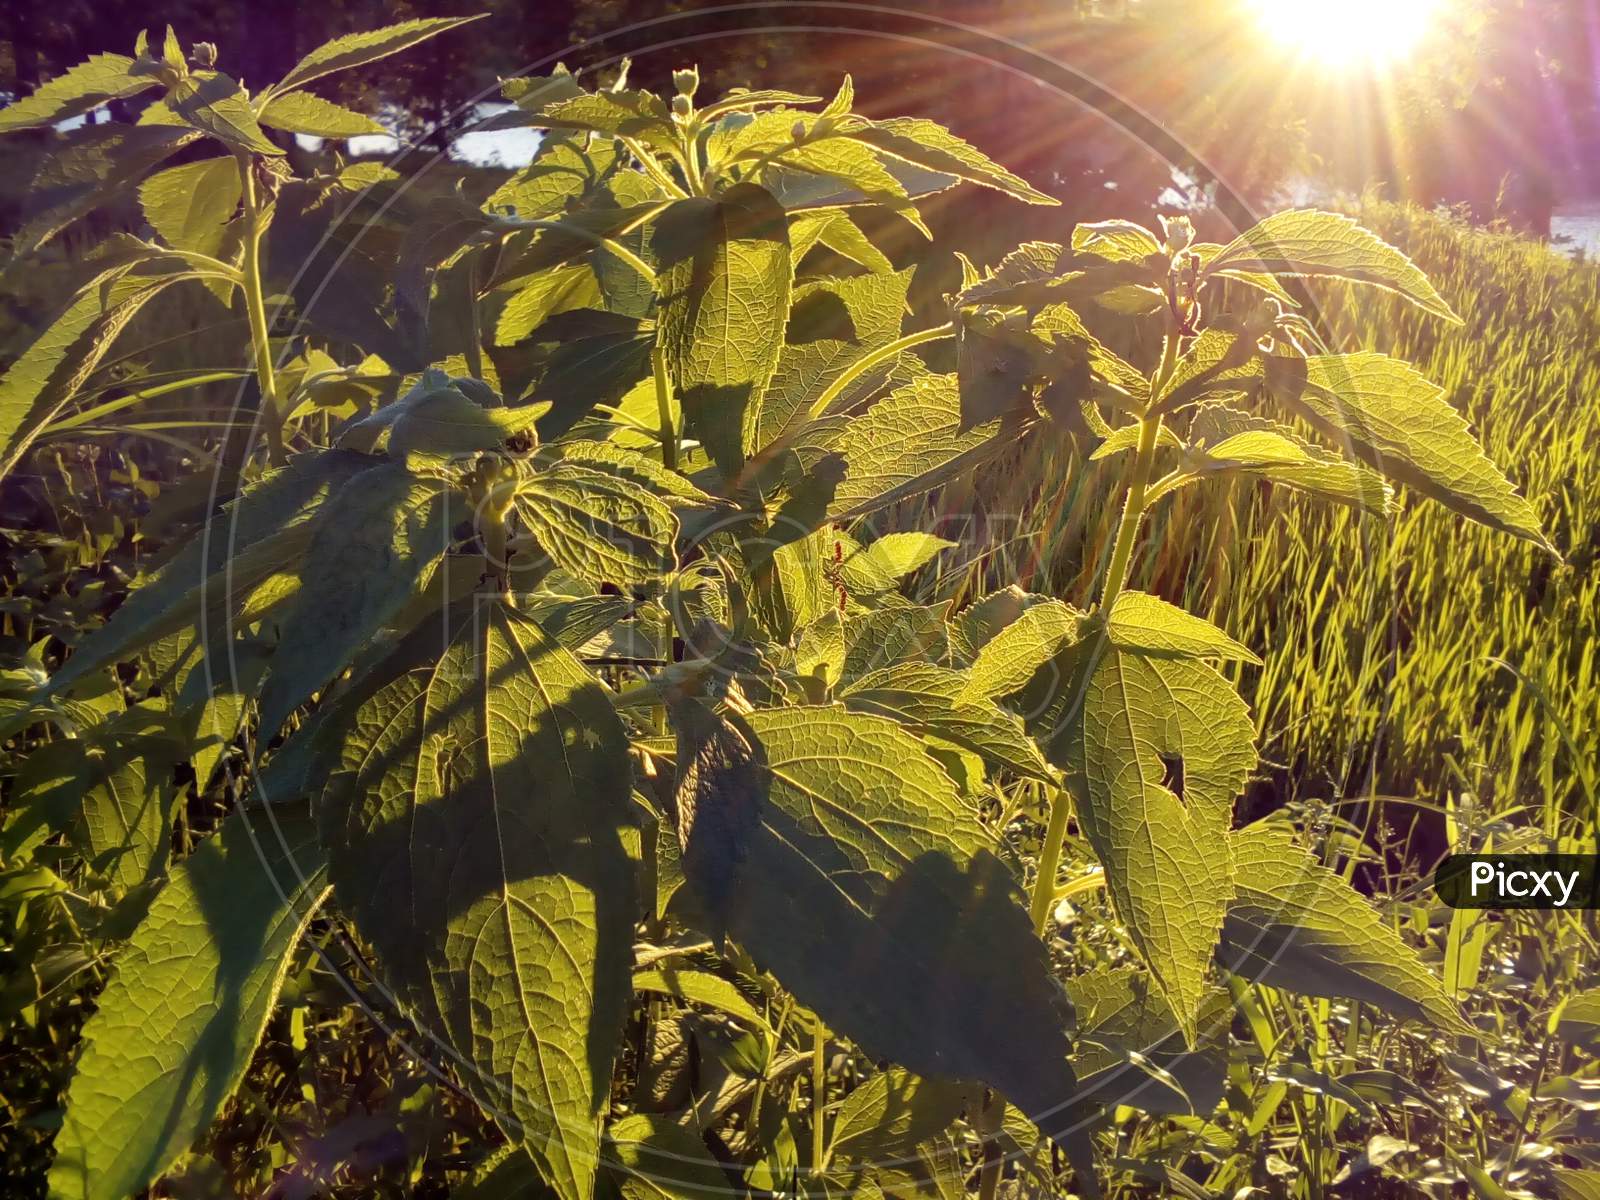 Beautifully illuminated plants due to exposure to sunlight / rays